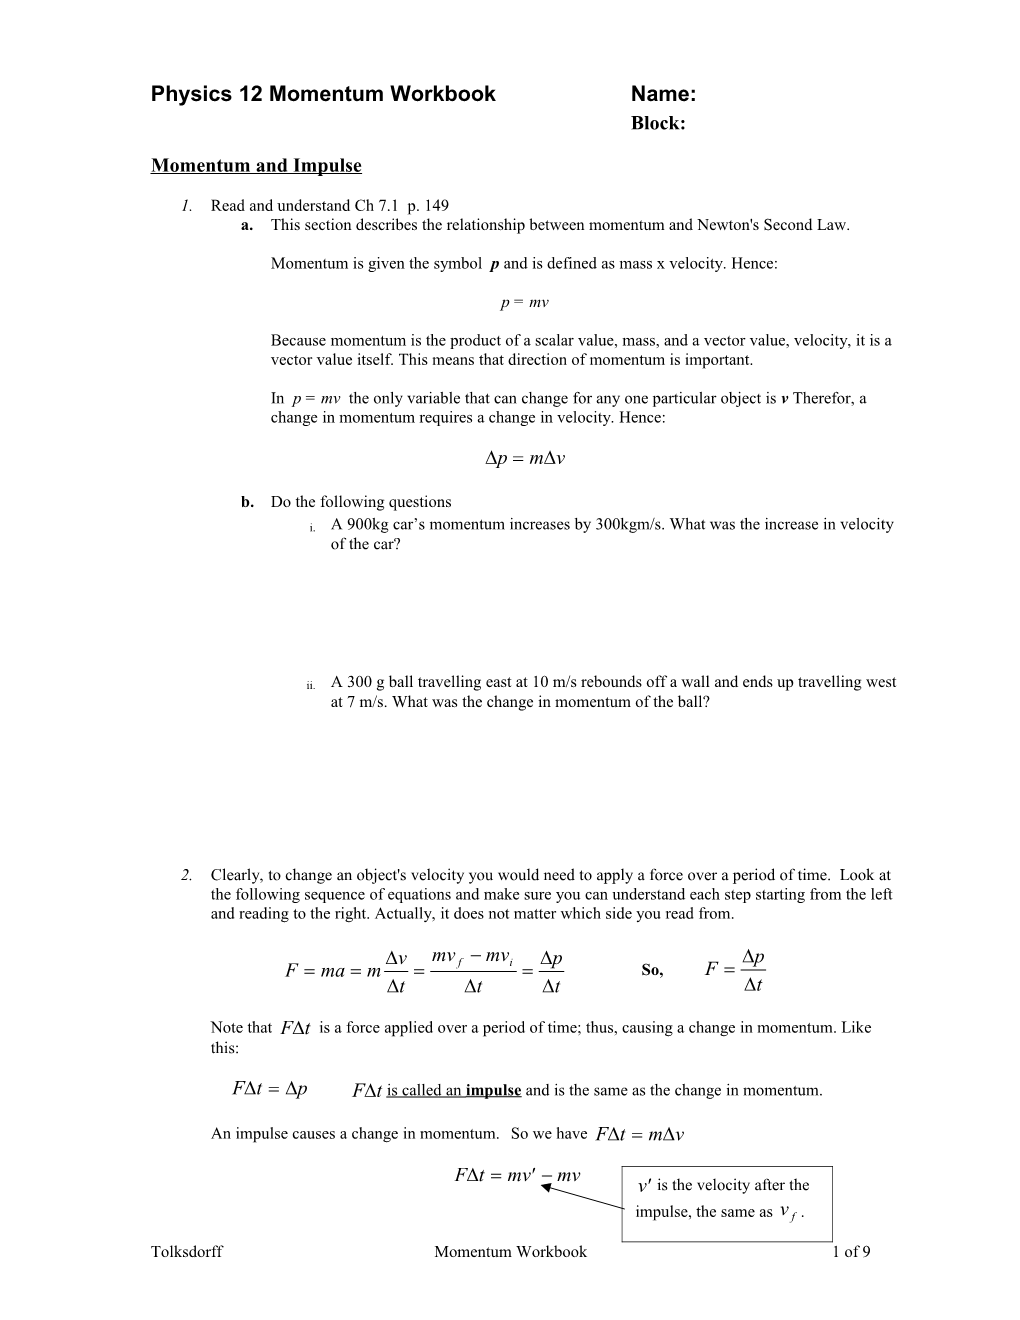 Physics 12 Momentum Workbookname